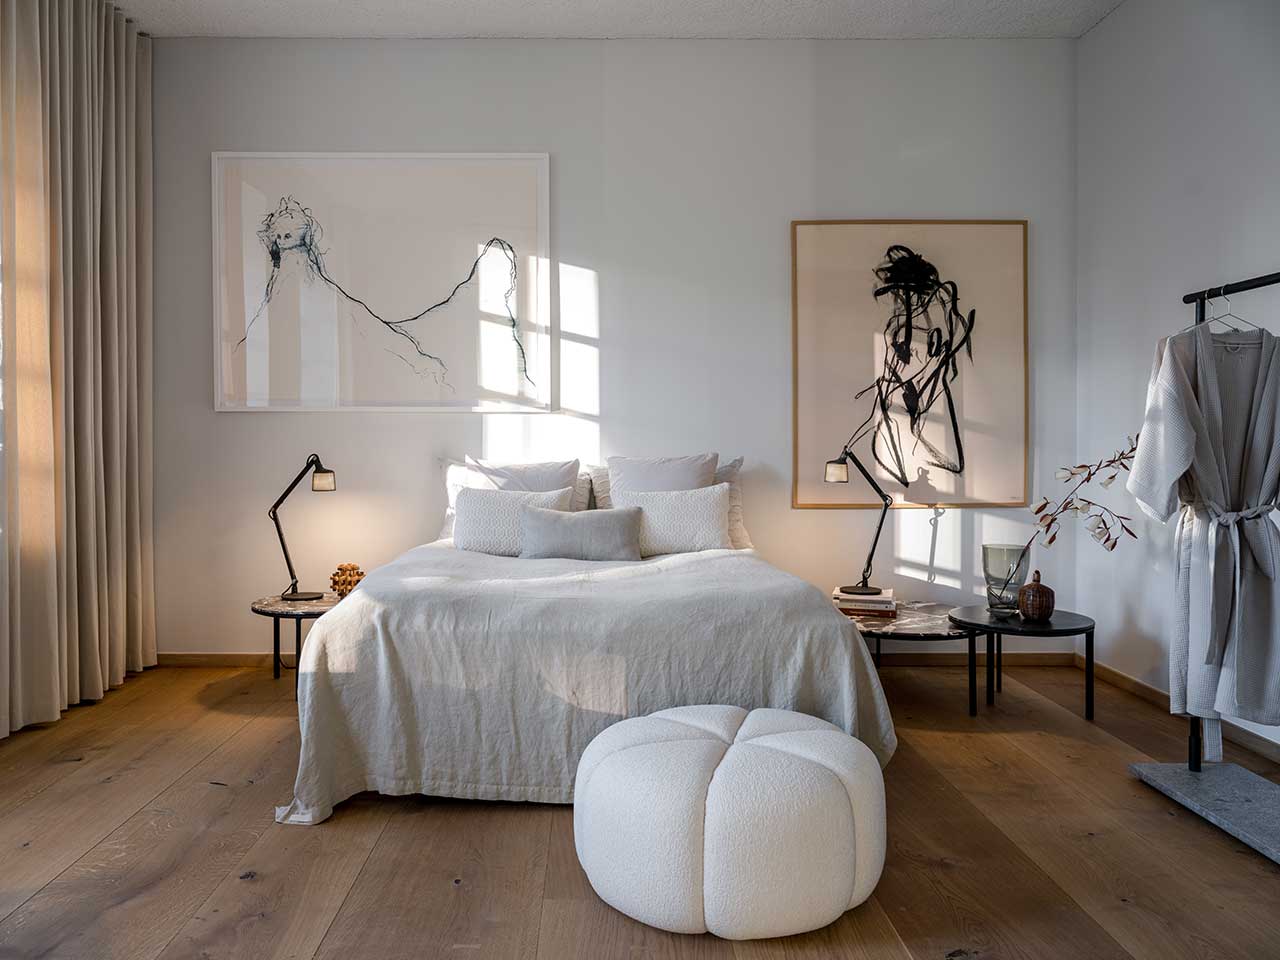 Vipp Opens New One-Room Hotel in Old Pencil Factory in Copenhagen